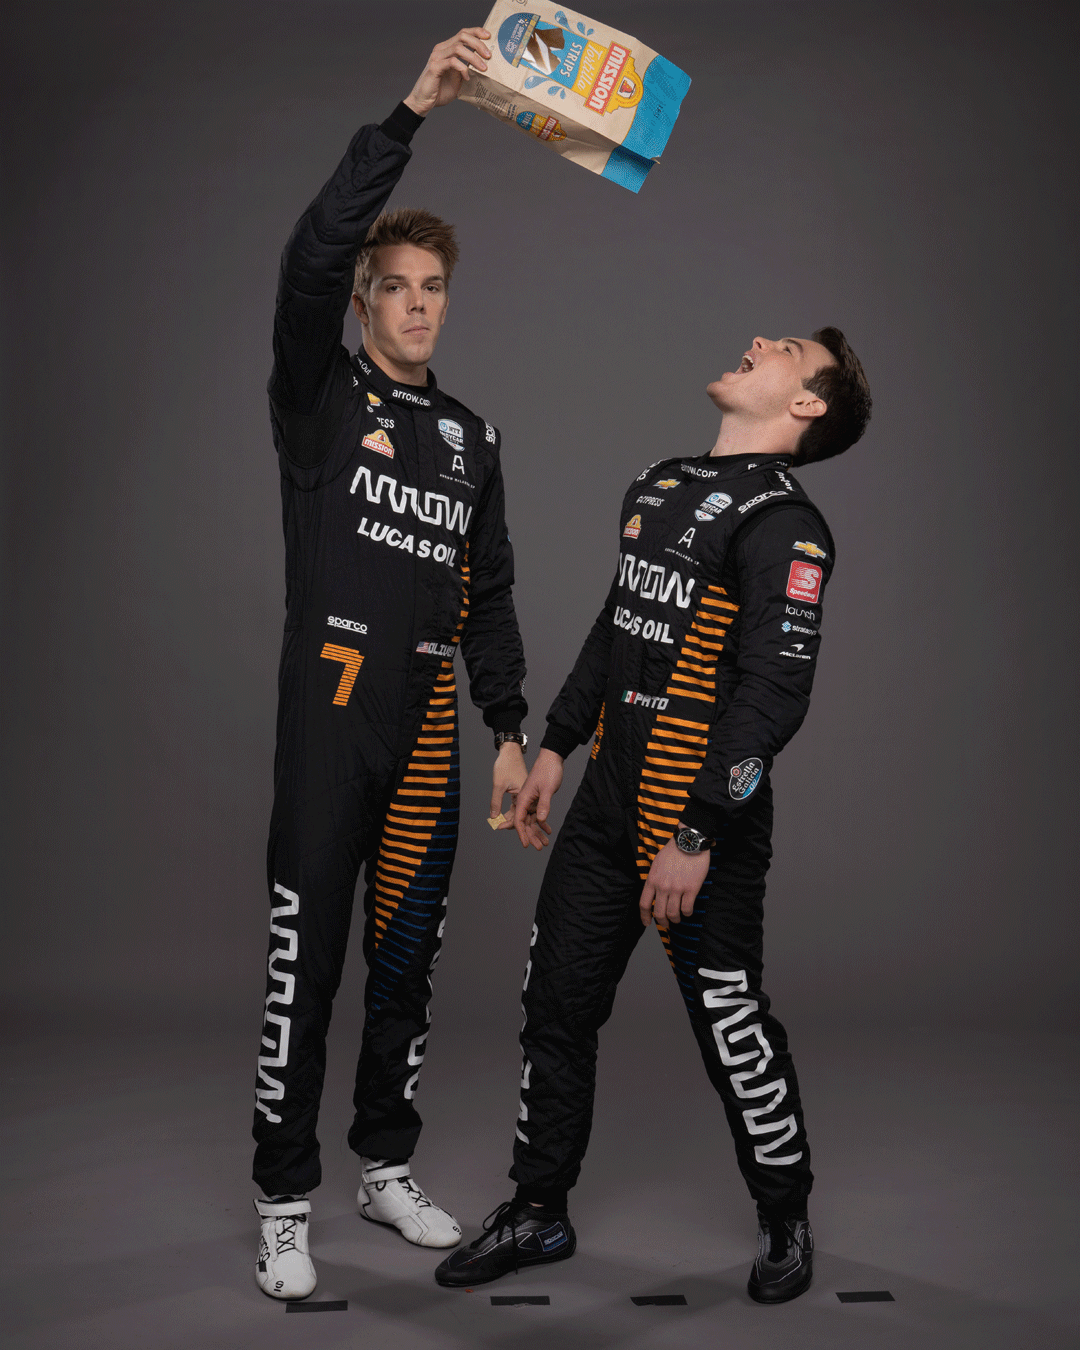 Arrow McLaren SP IndyCar drivers Patricio O’Ward and Oliver Askew